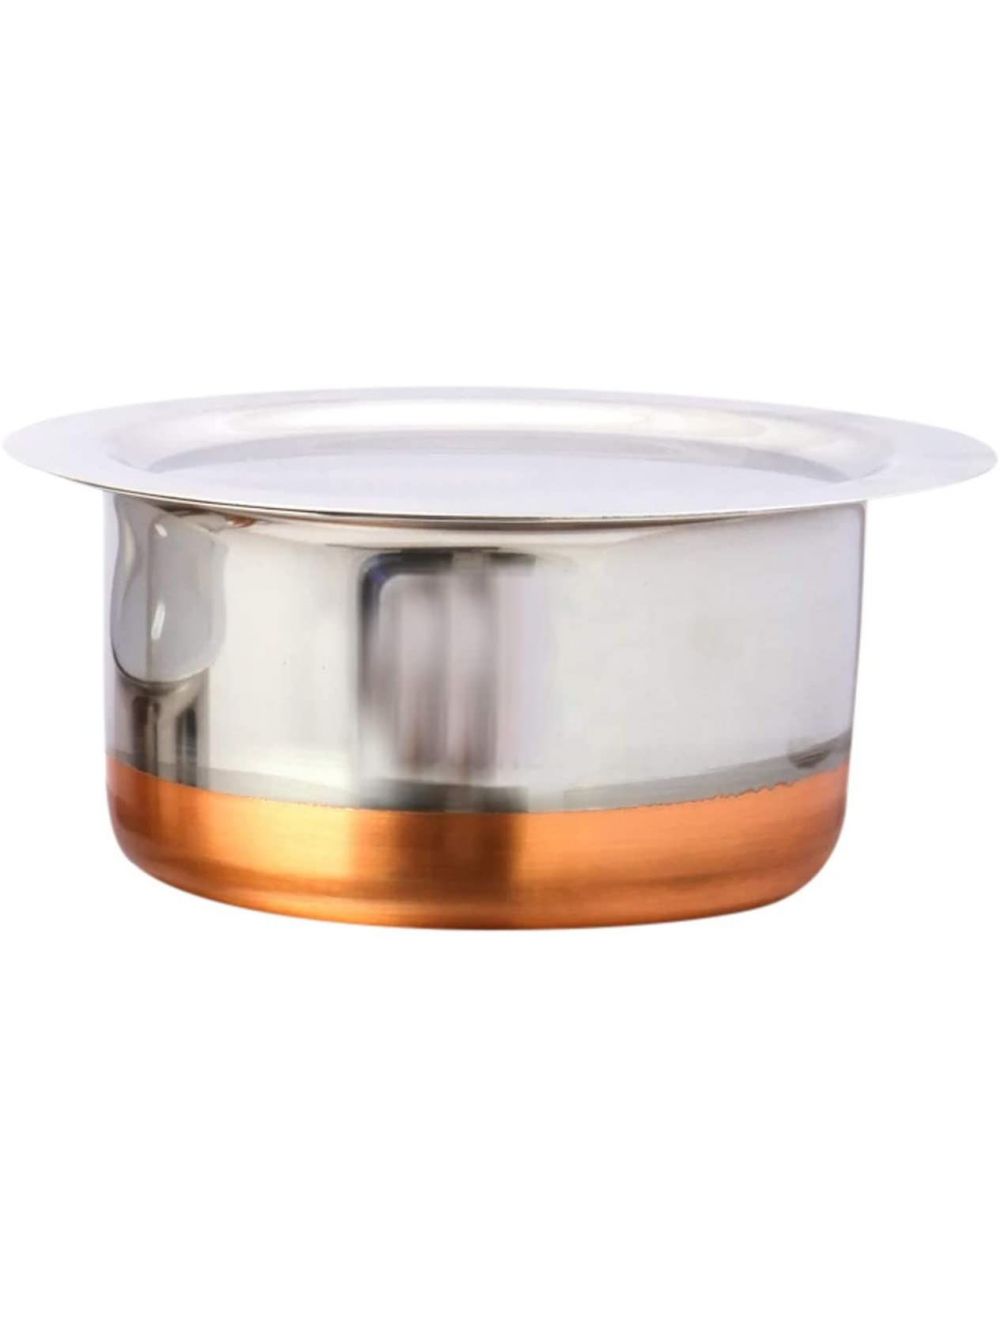 Raj Copper Bottom Cooking Pot, Silver, 13x25x13 cm, GCBT07